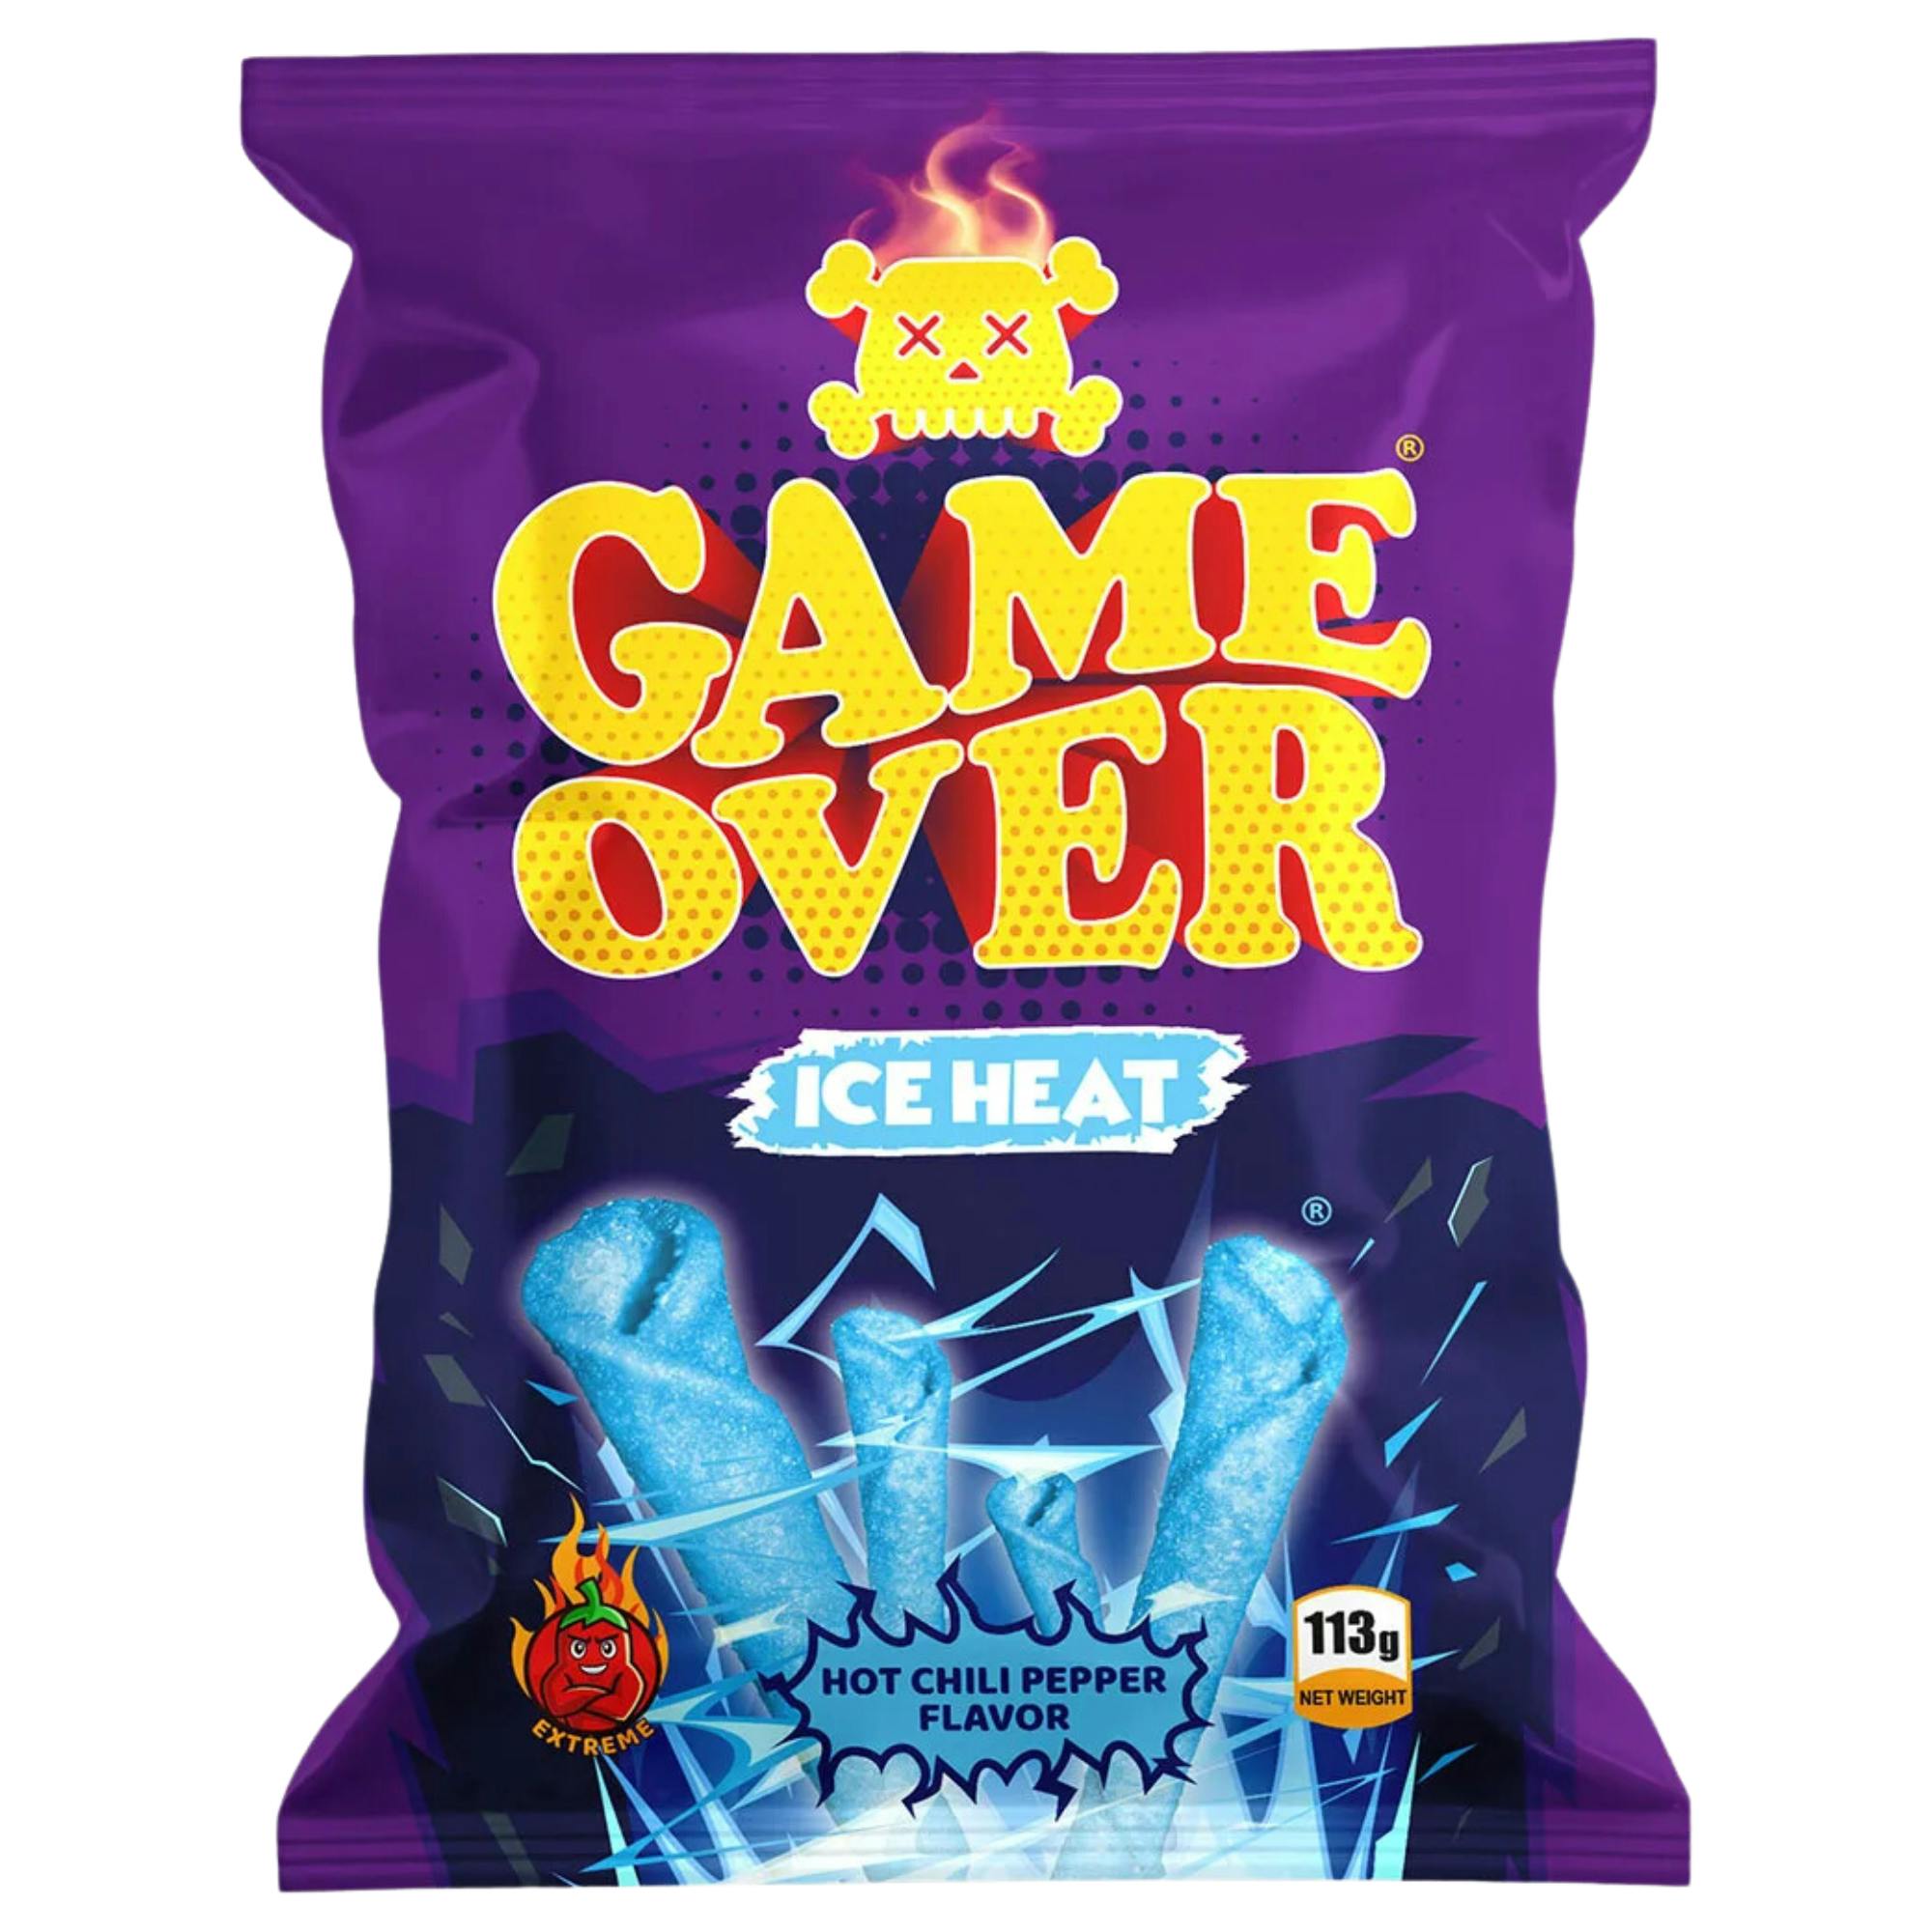 Game Over – Ice heat 113g